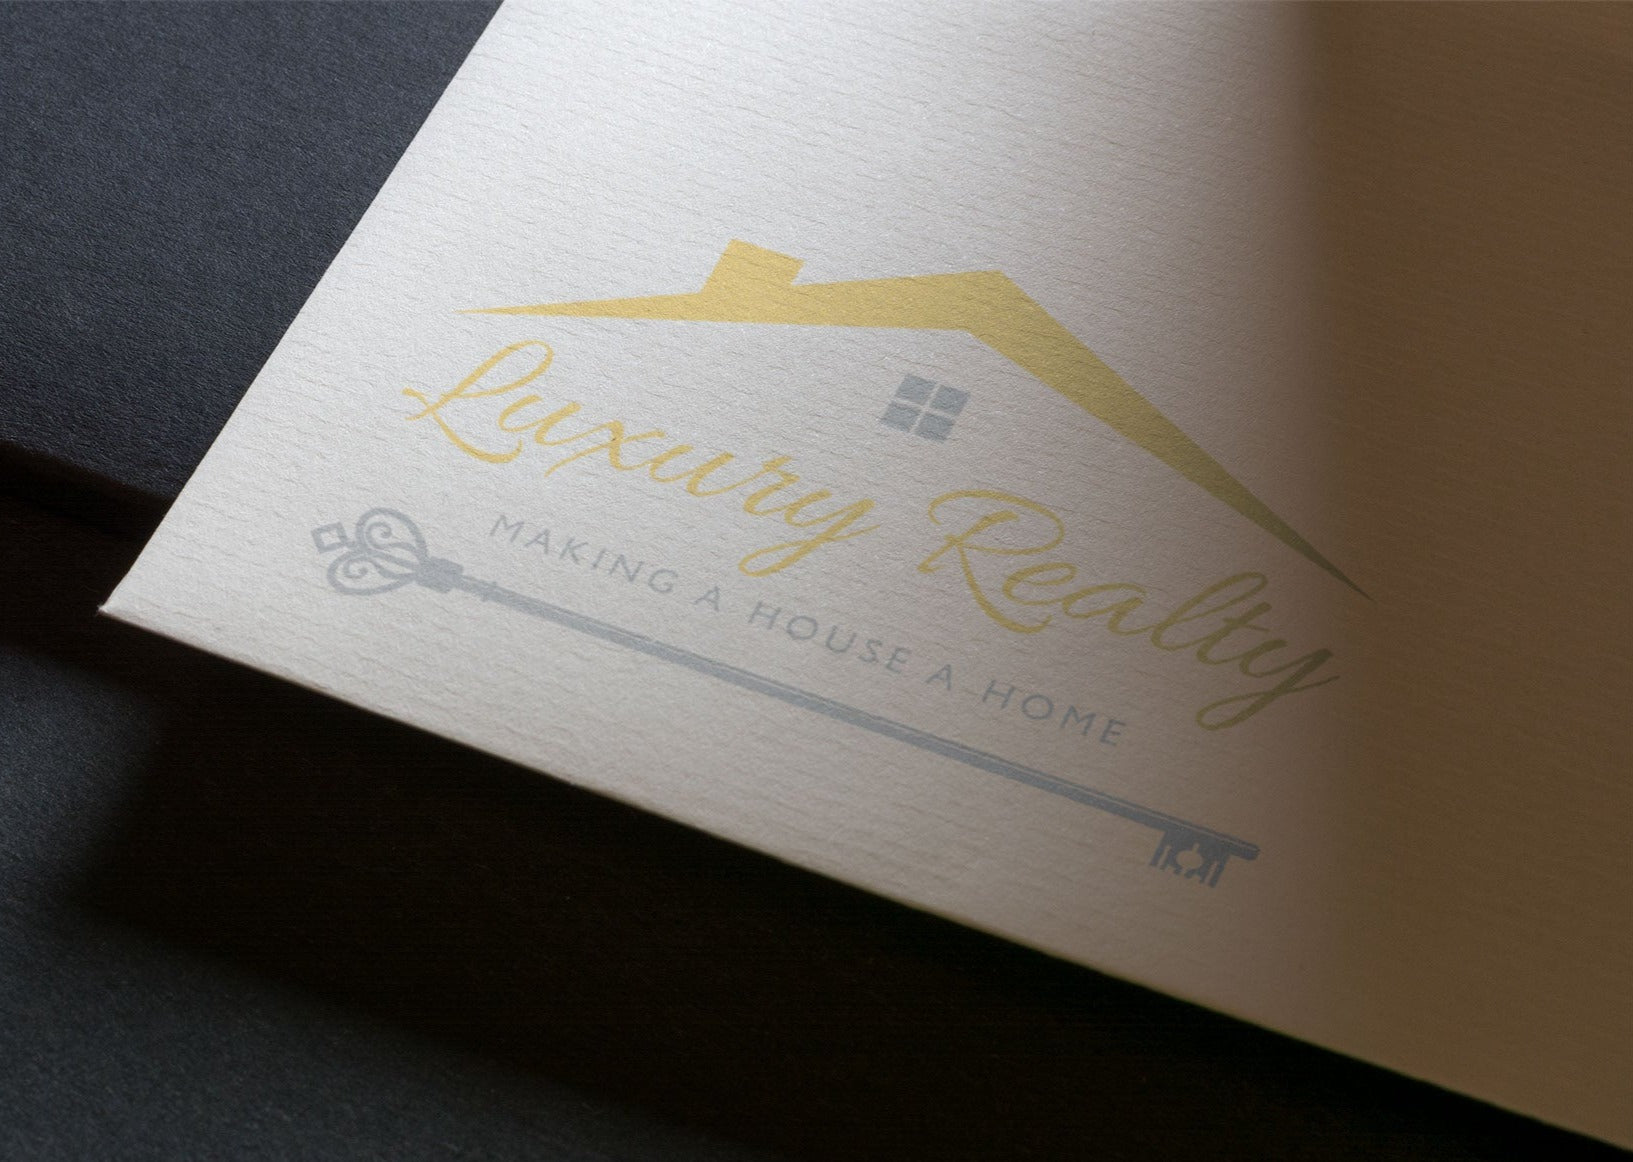 Logo Design - Real Estate Logo | Realtor Logo | Realty Business | Key Logo Design | House Design